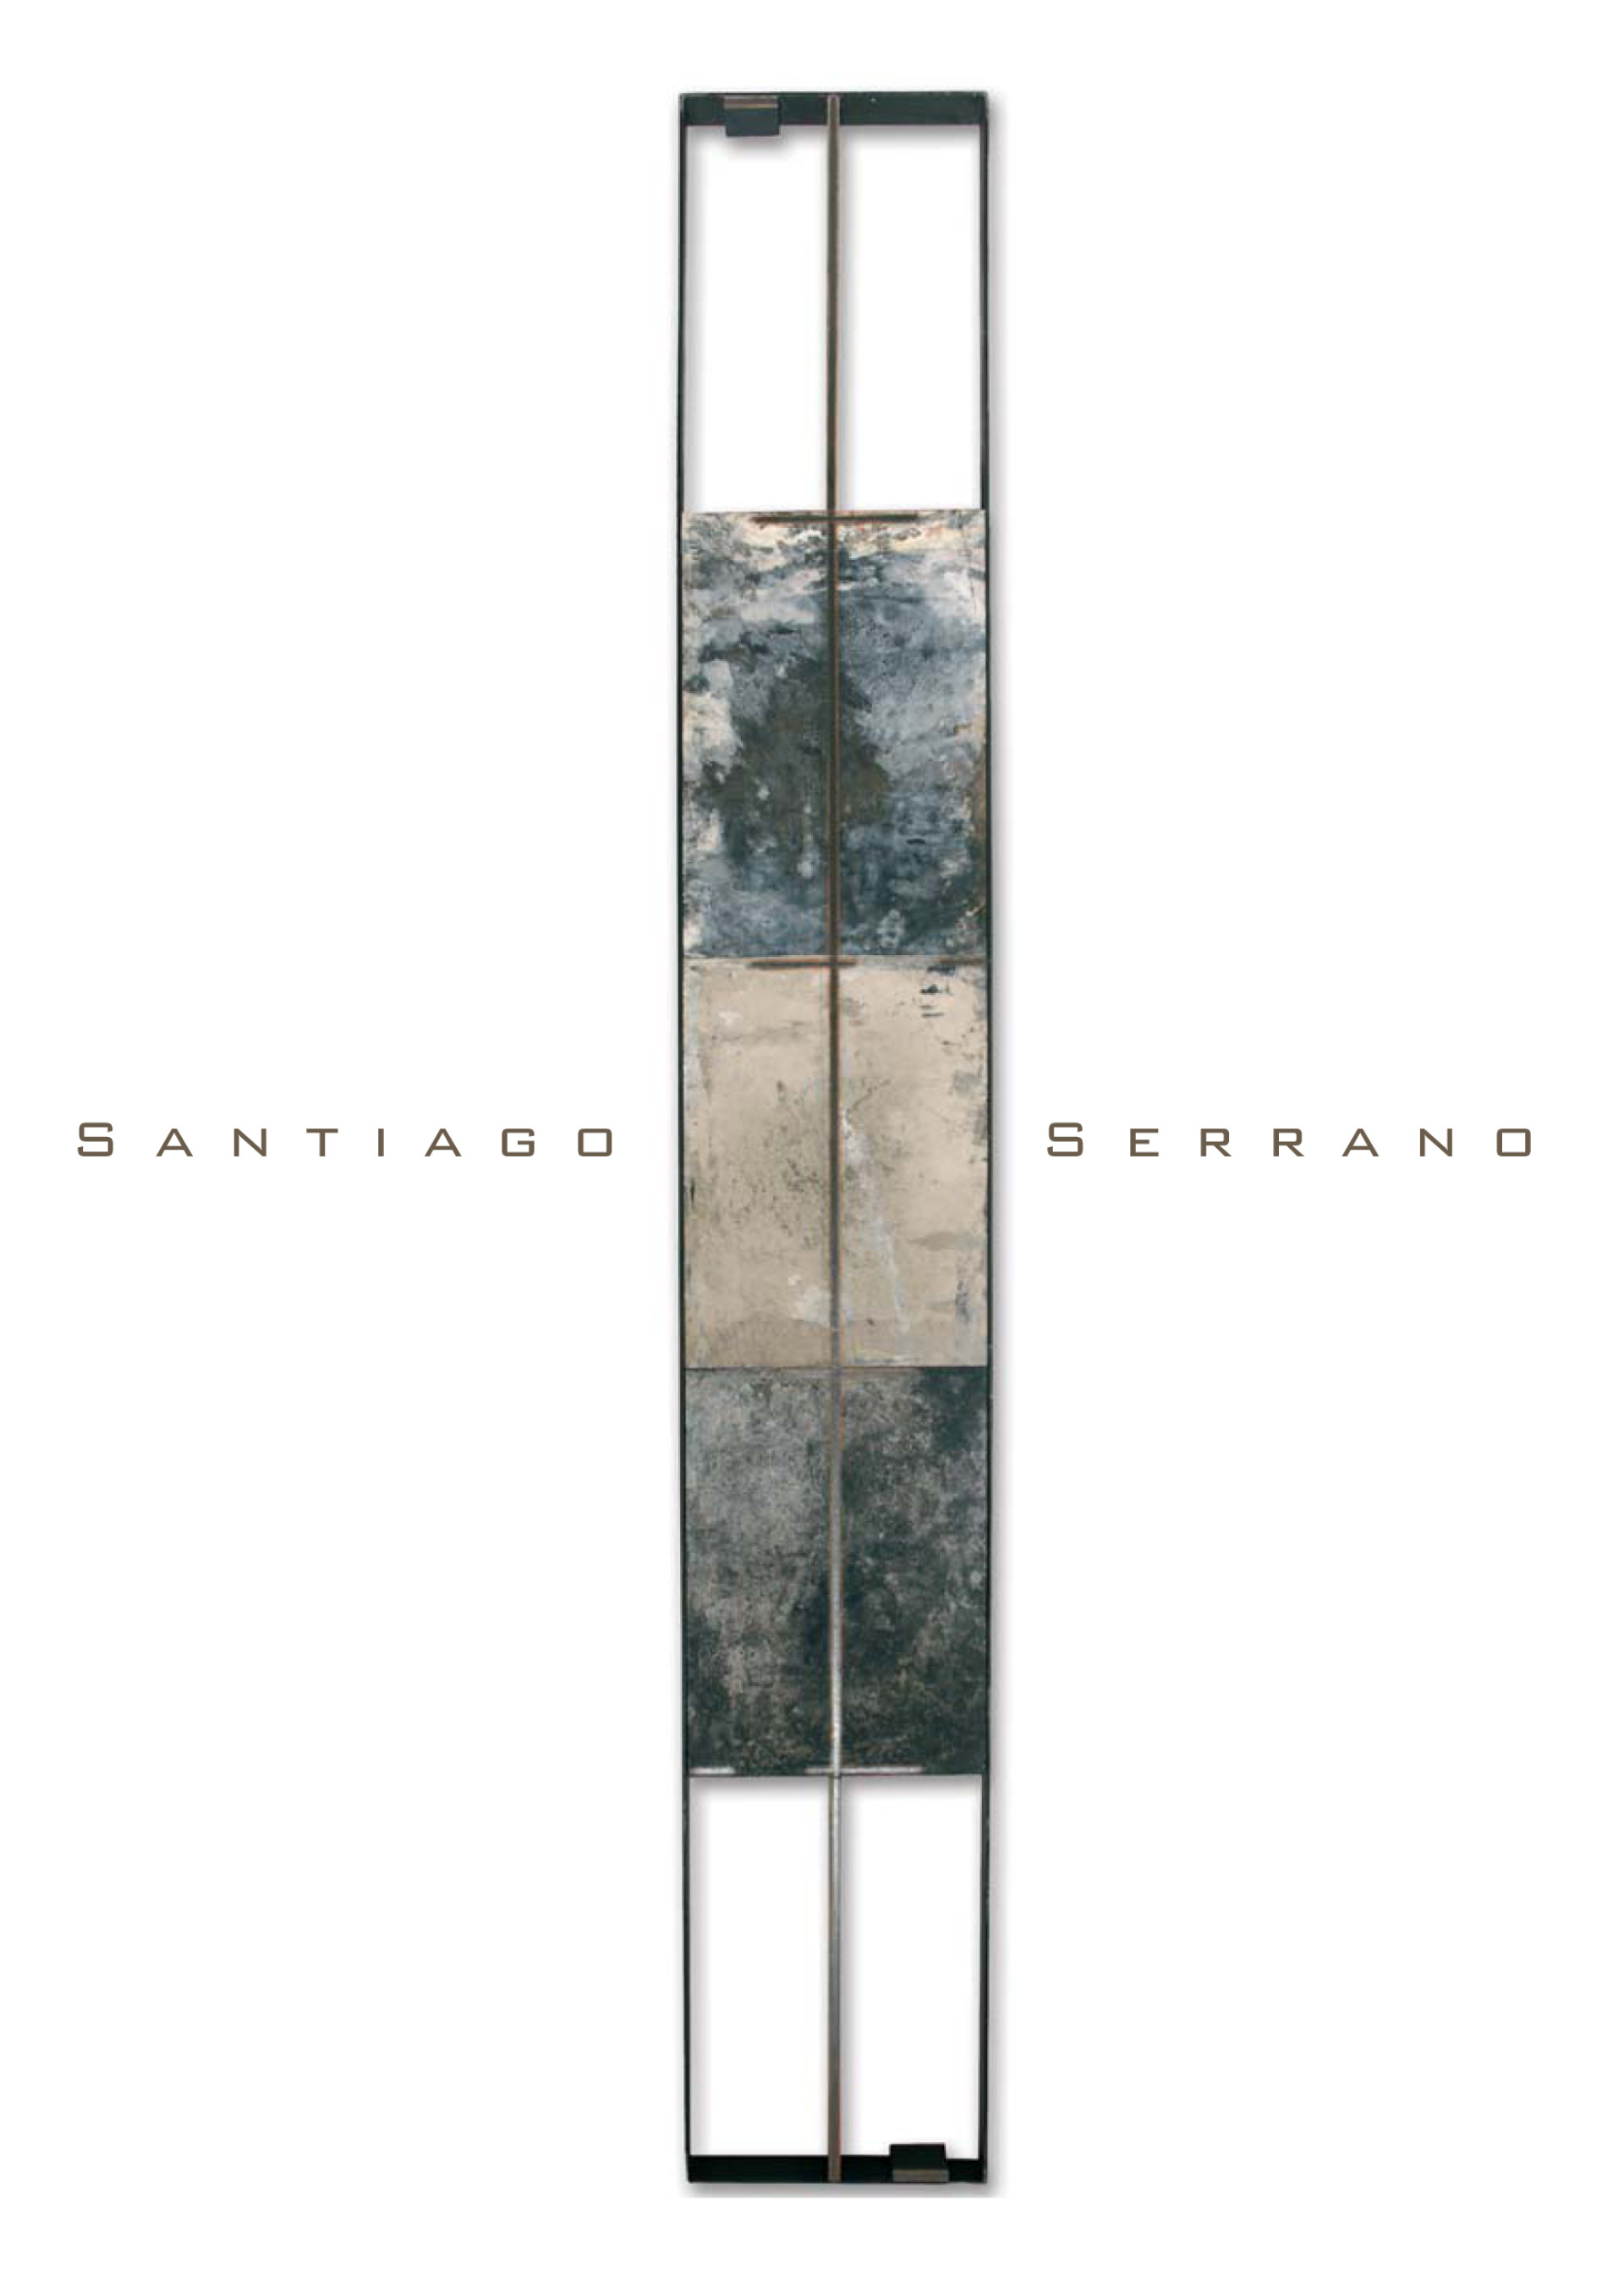 The essential talents of Santiago Serrano